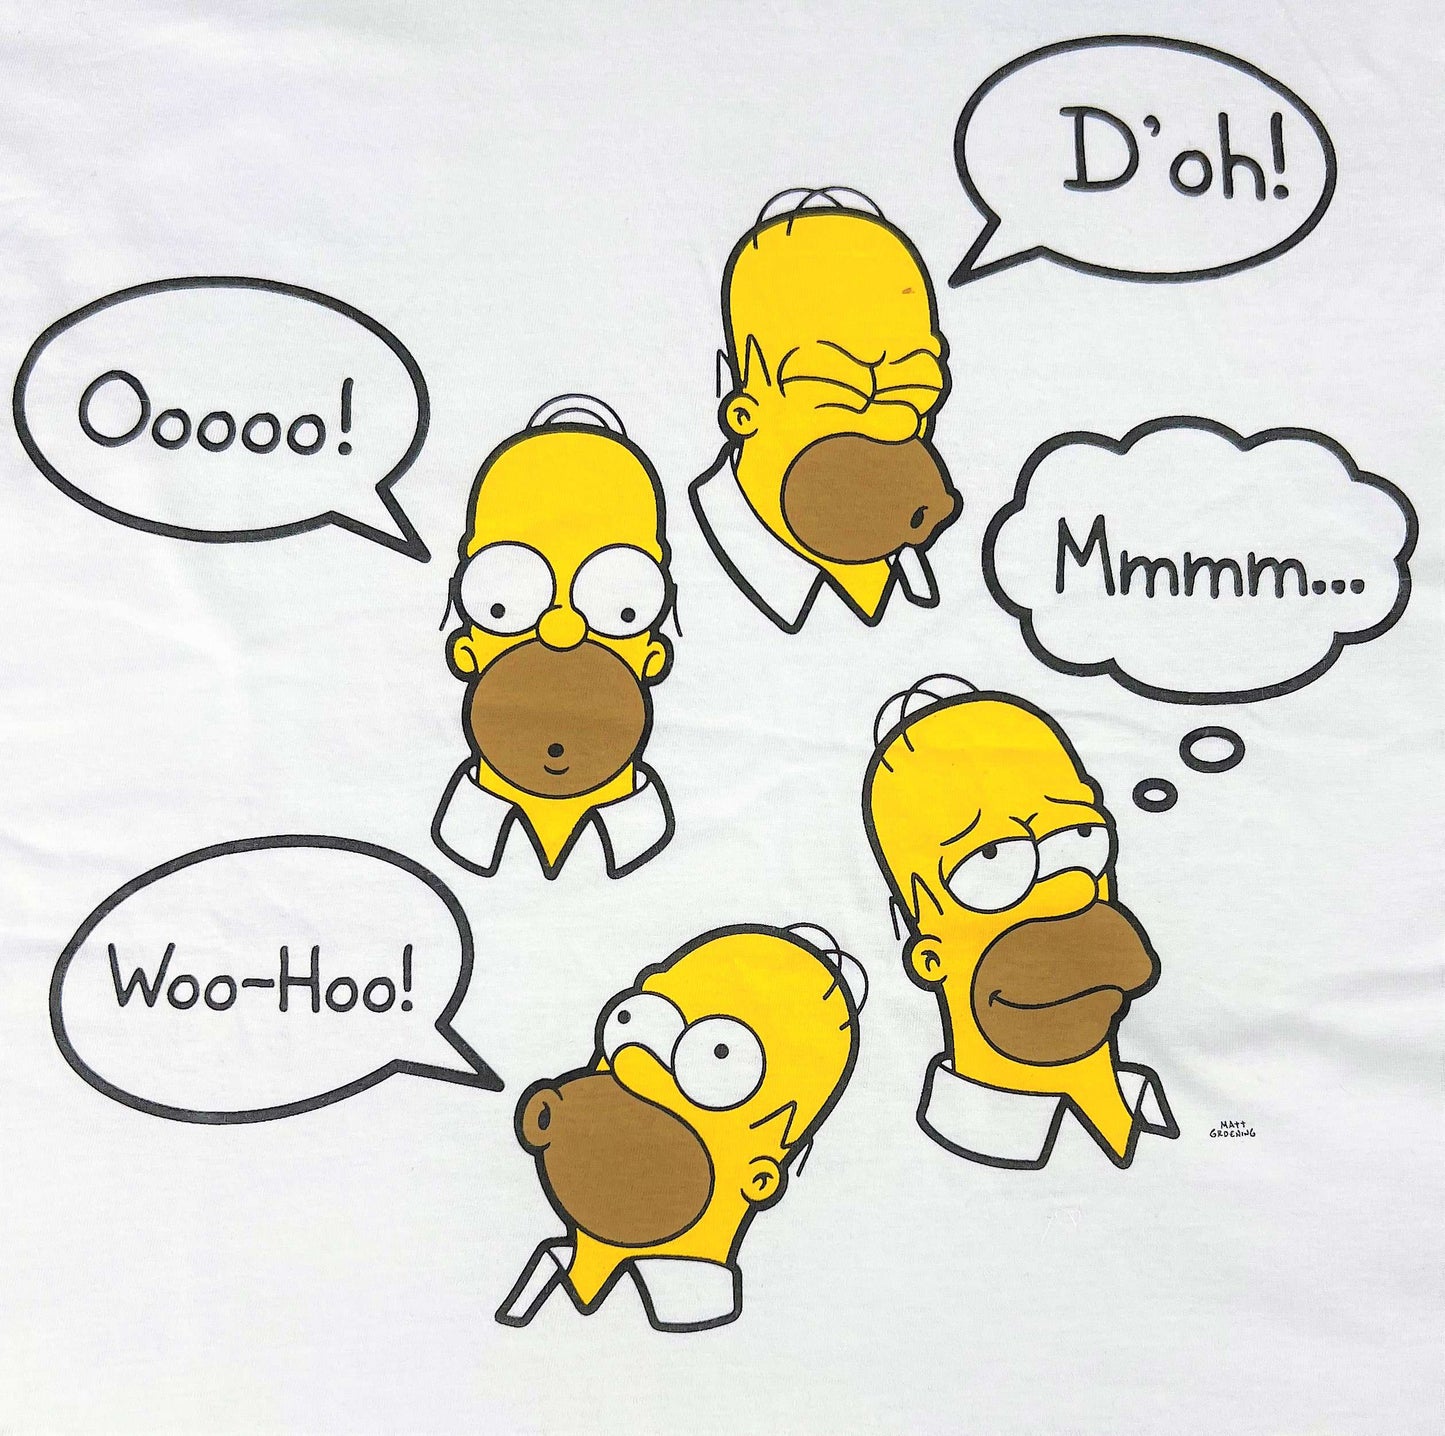 The Simpsons “D’oh”  Men’s 2 Piece Pyjama Set